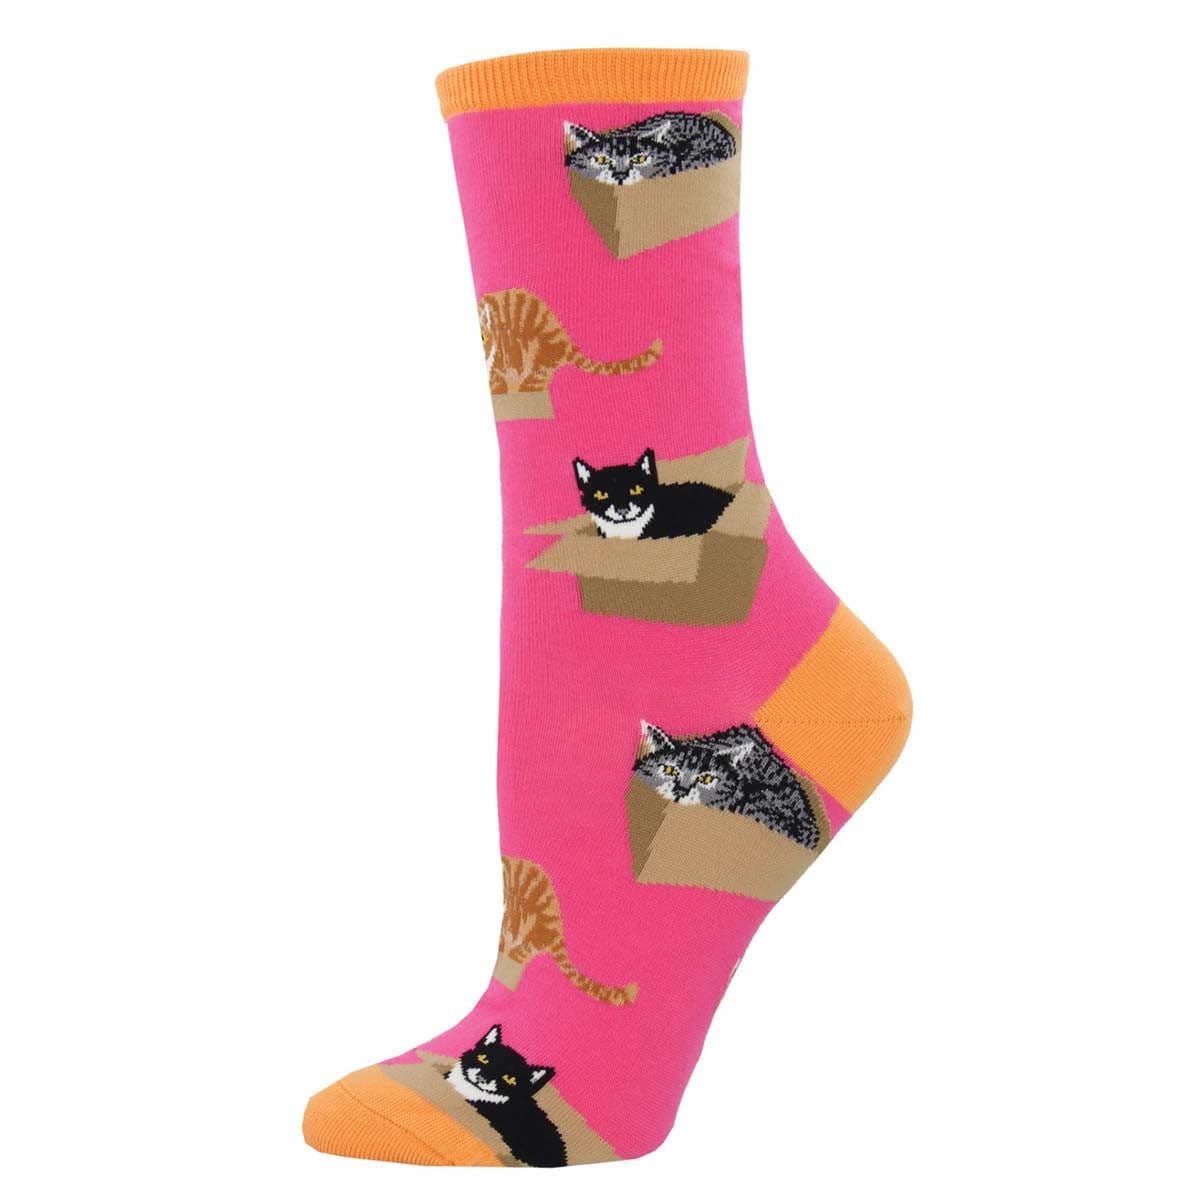 Cat In A Box Women's Crew Socks Pink